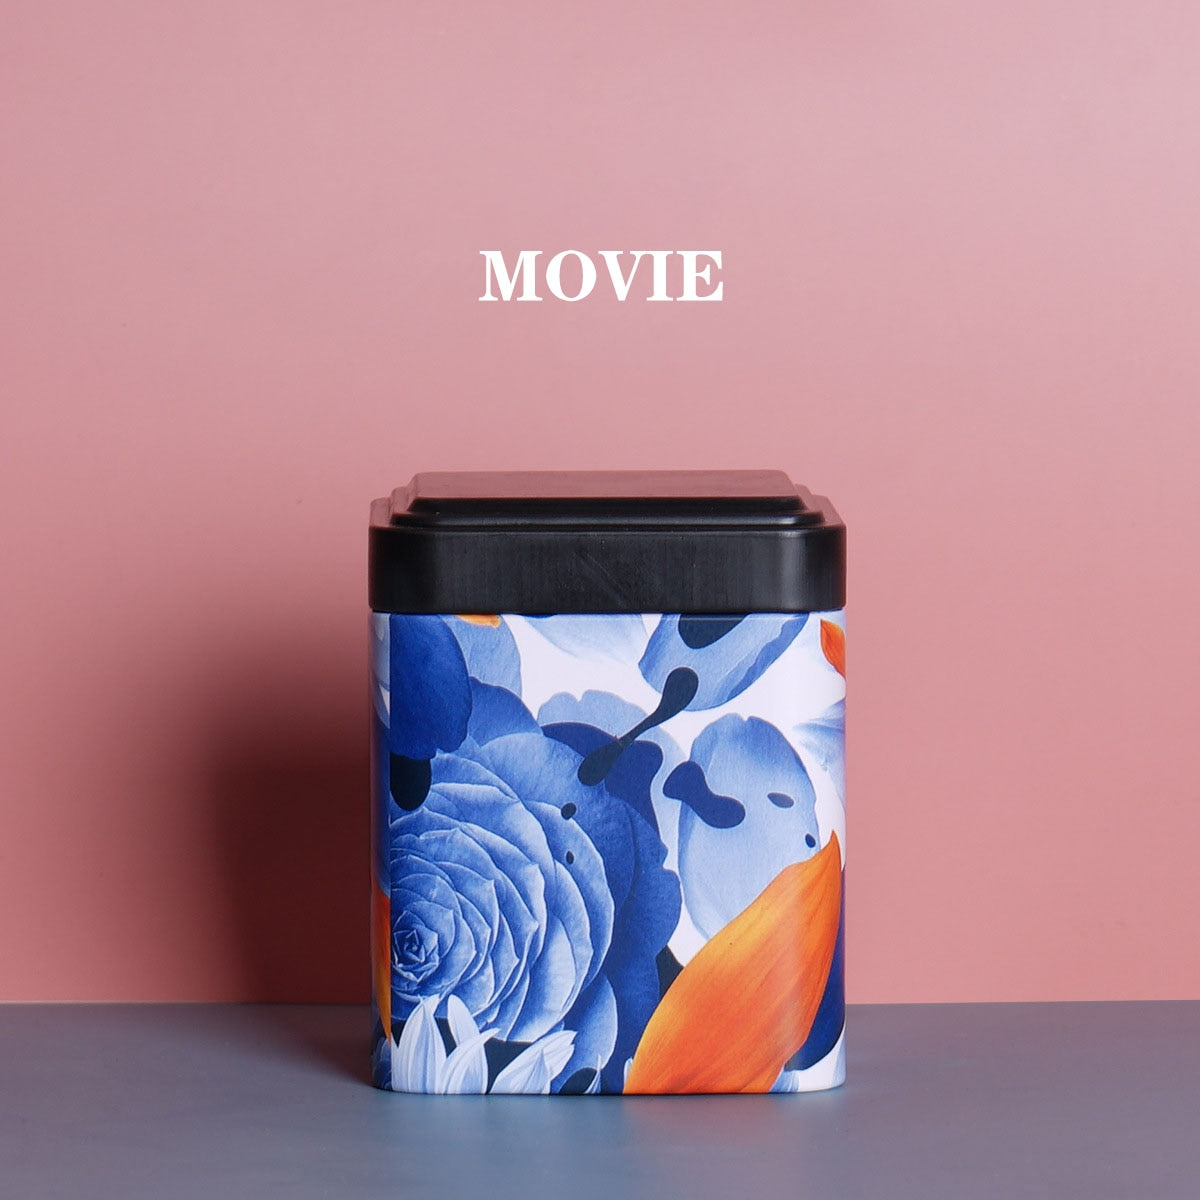 Mini Square Jar Tea Tinplate Box Creative Universal Cans Small Tea Cans Candy Scented Green Tea Storage Box